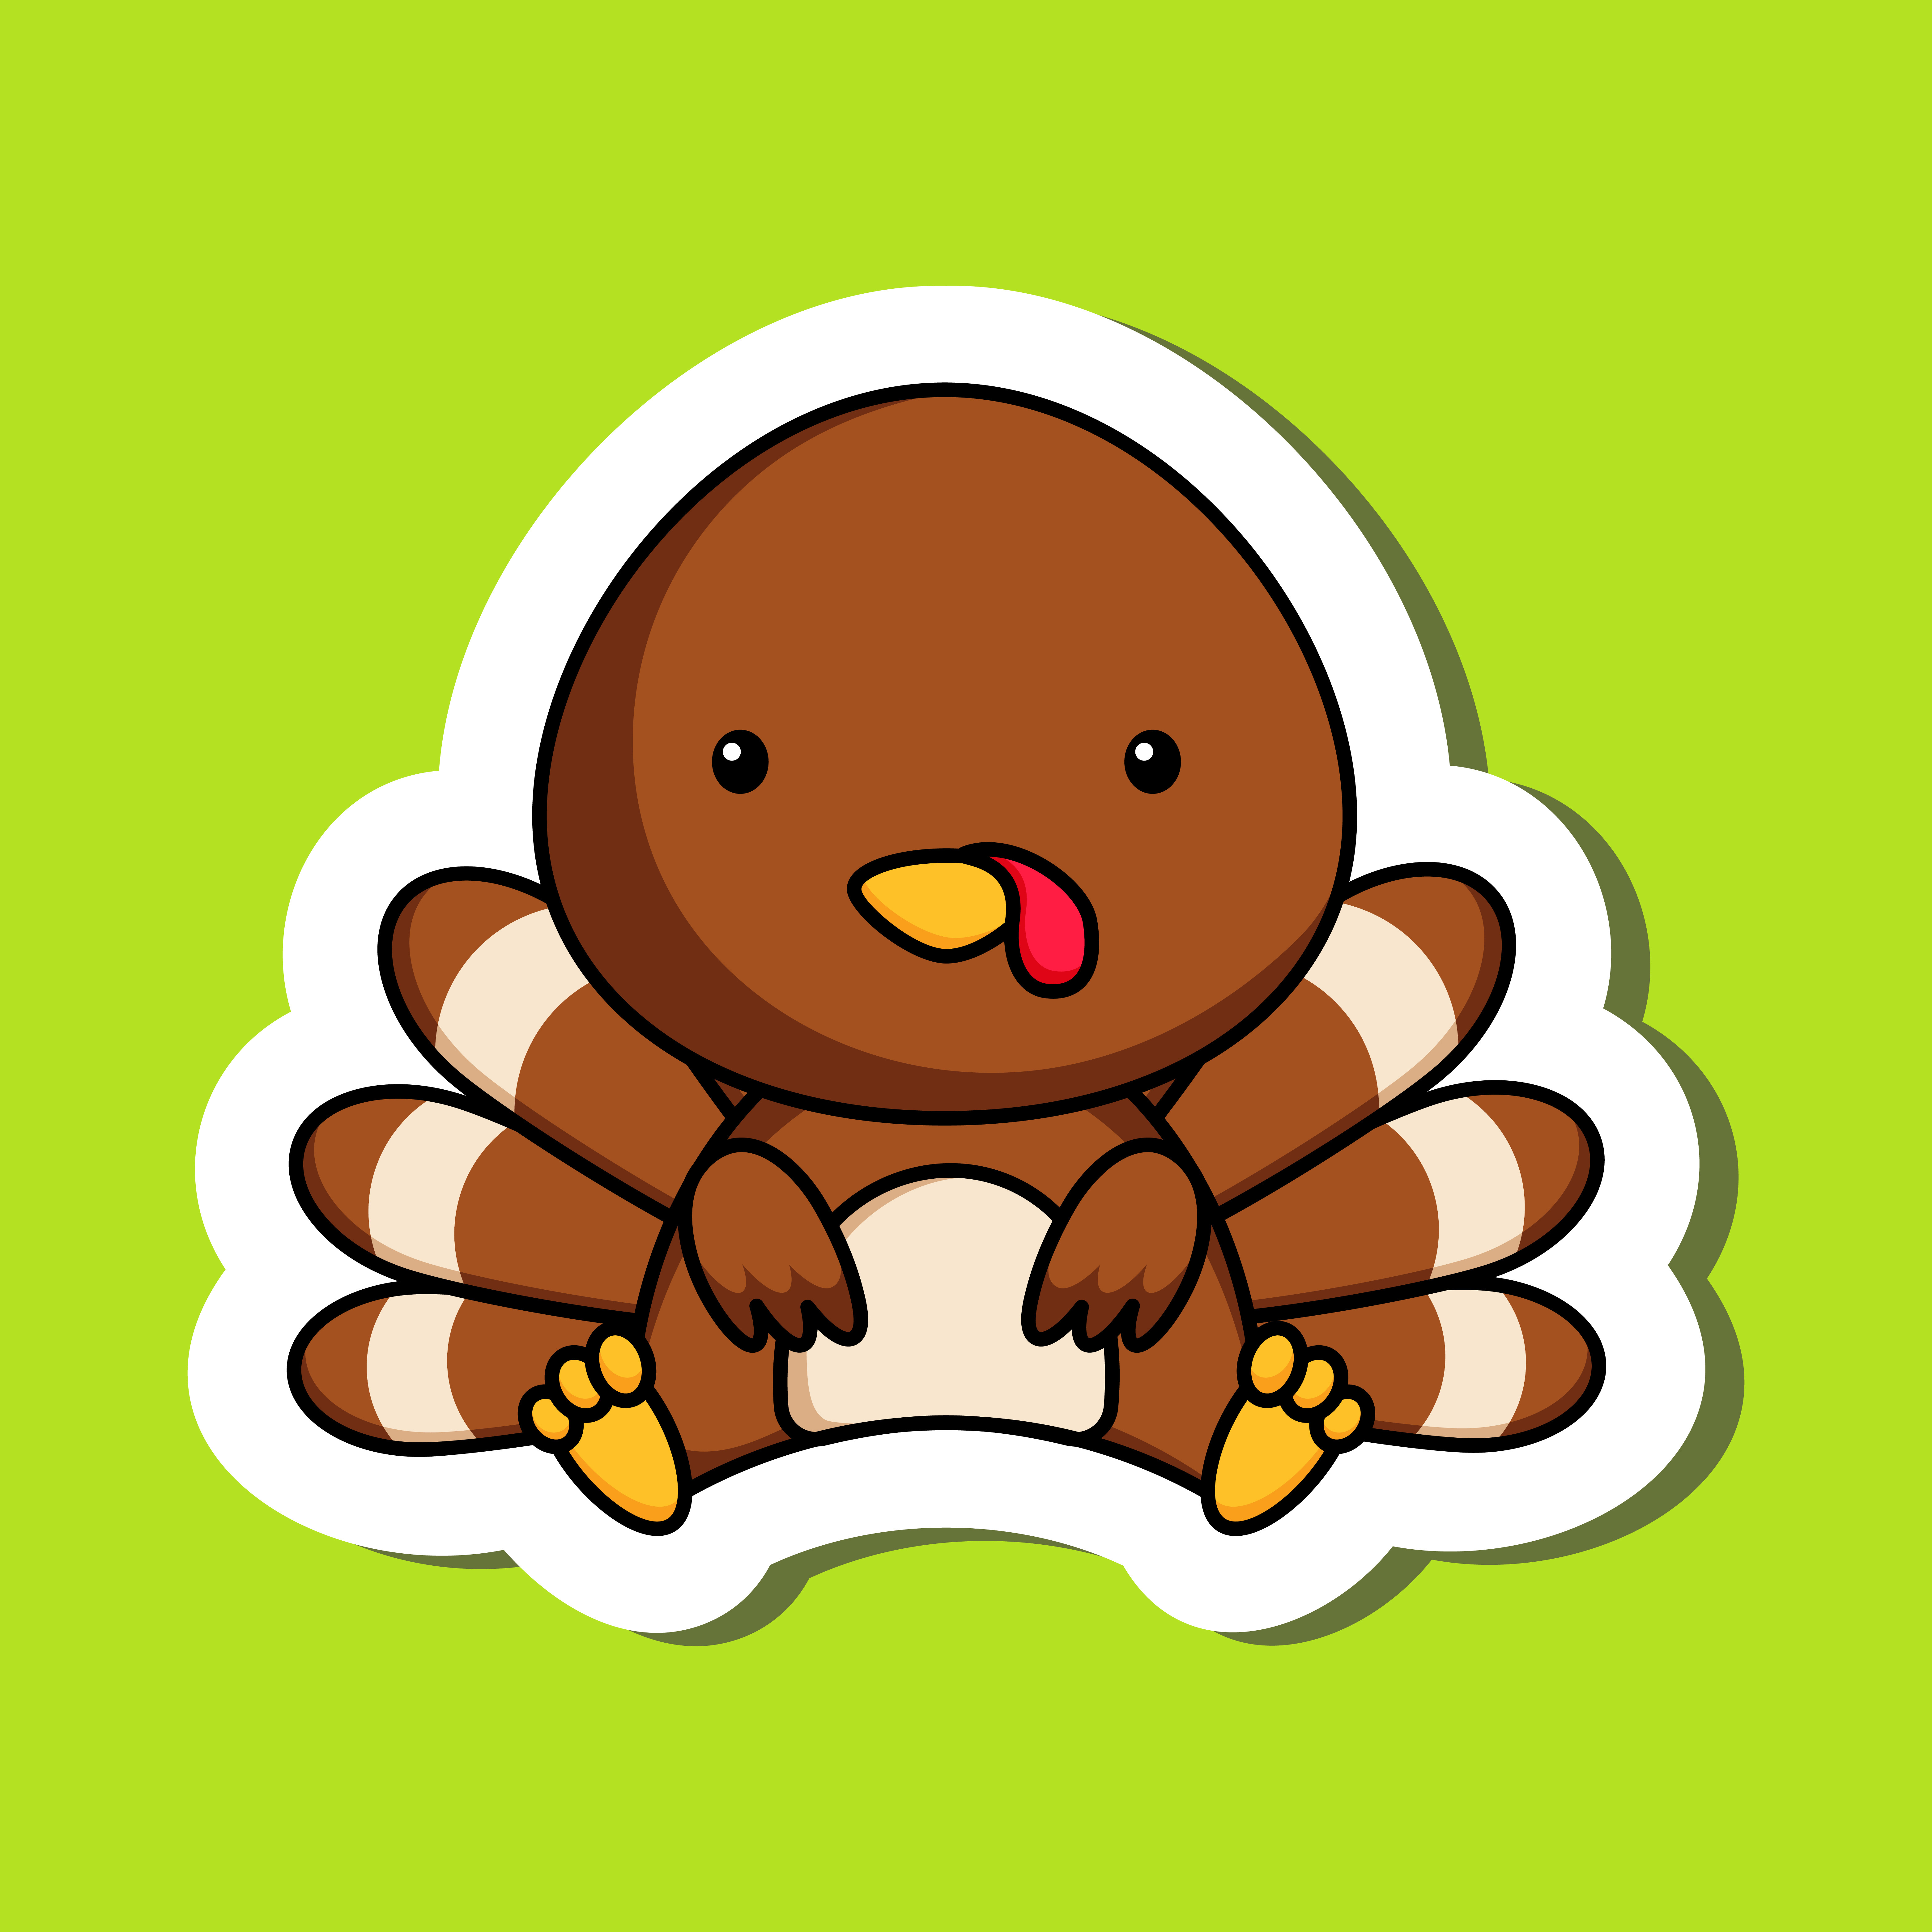 Cute cartoon sticker little turkey logo template. Mascot animal character design of album, scrapbook, greeting card, invitation, flyer, sticker, card. Vector stock illustration.